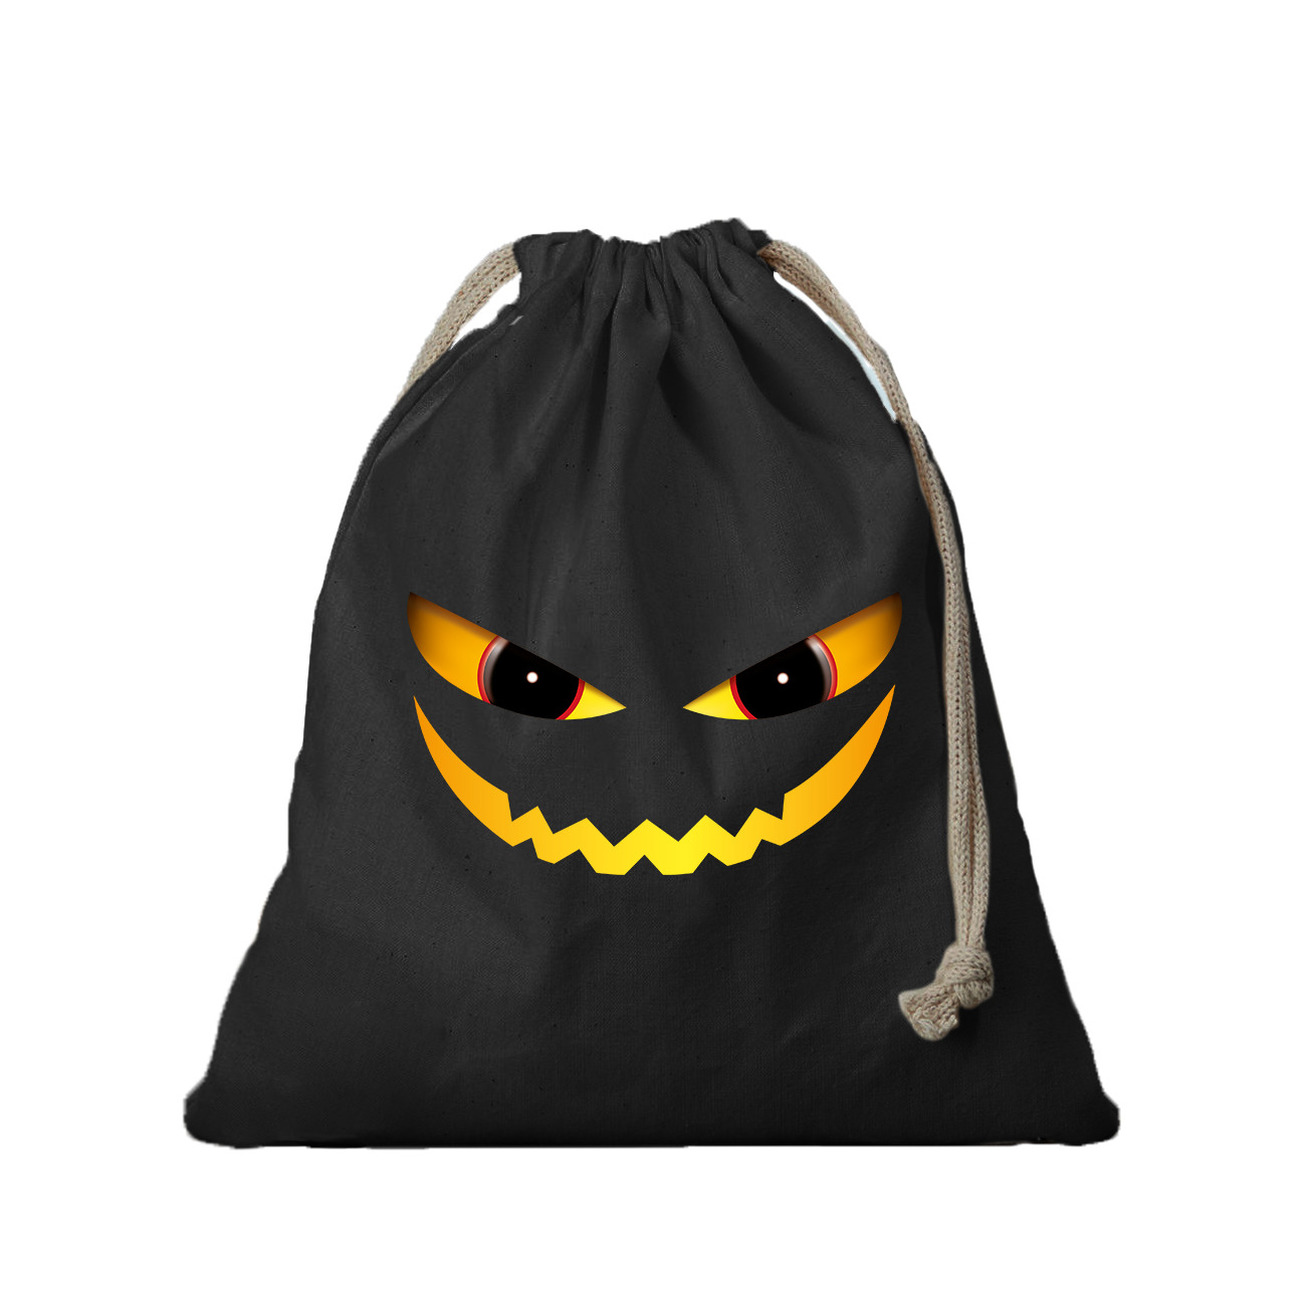 2x Katoenen Halloween snoep tasje duivel gezicht zwart 25 x 30 cm